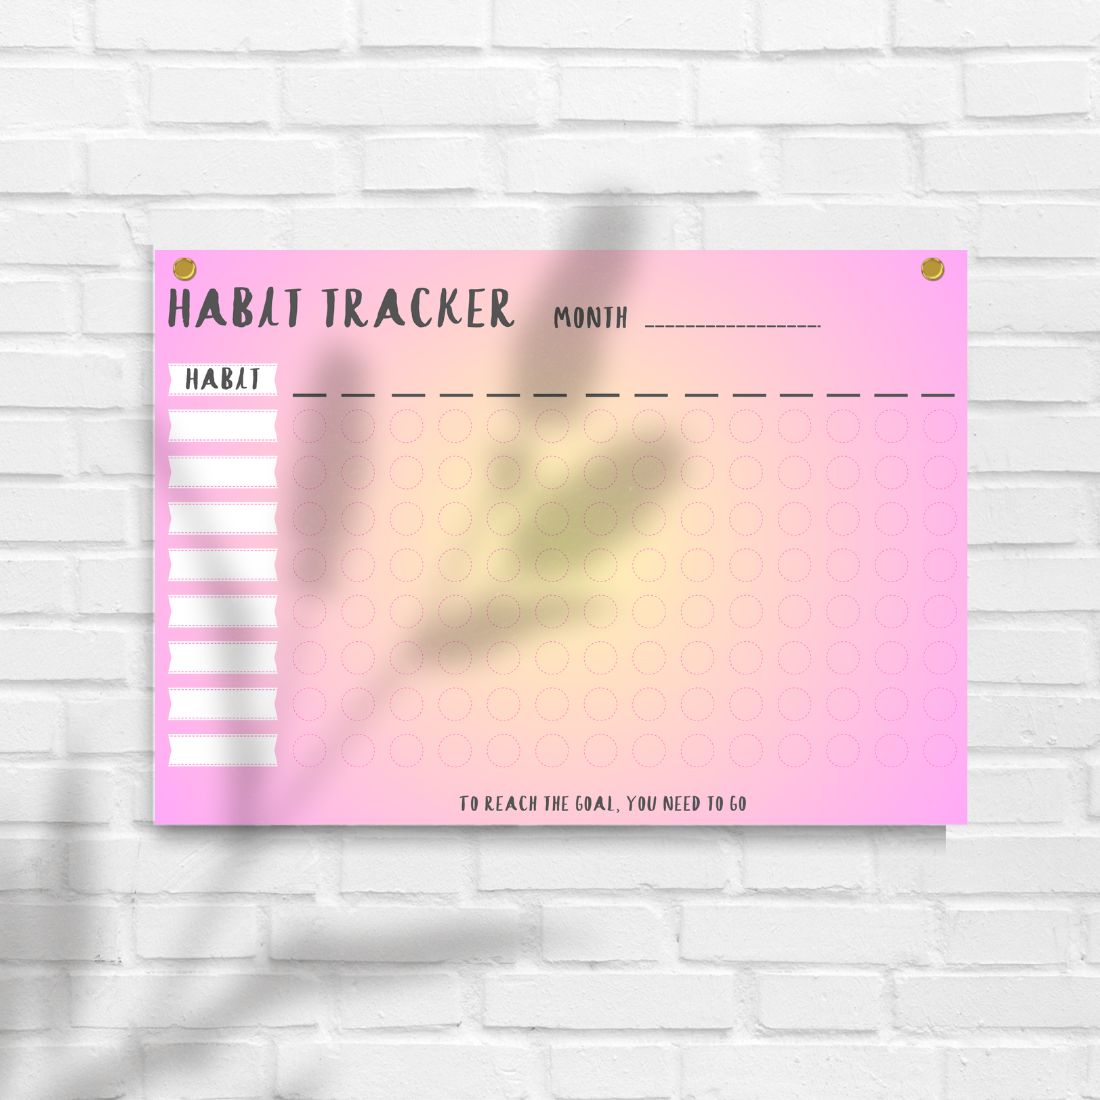 Habit tracker cover image.